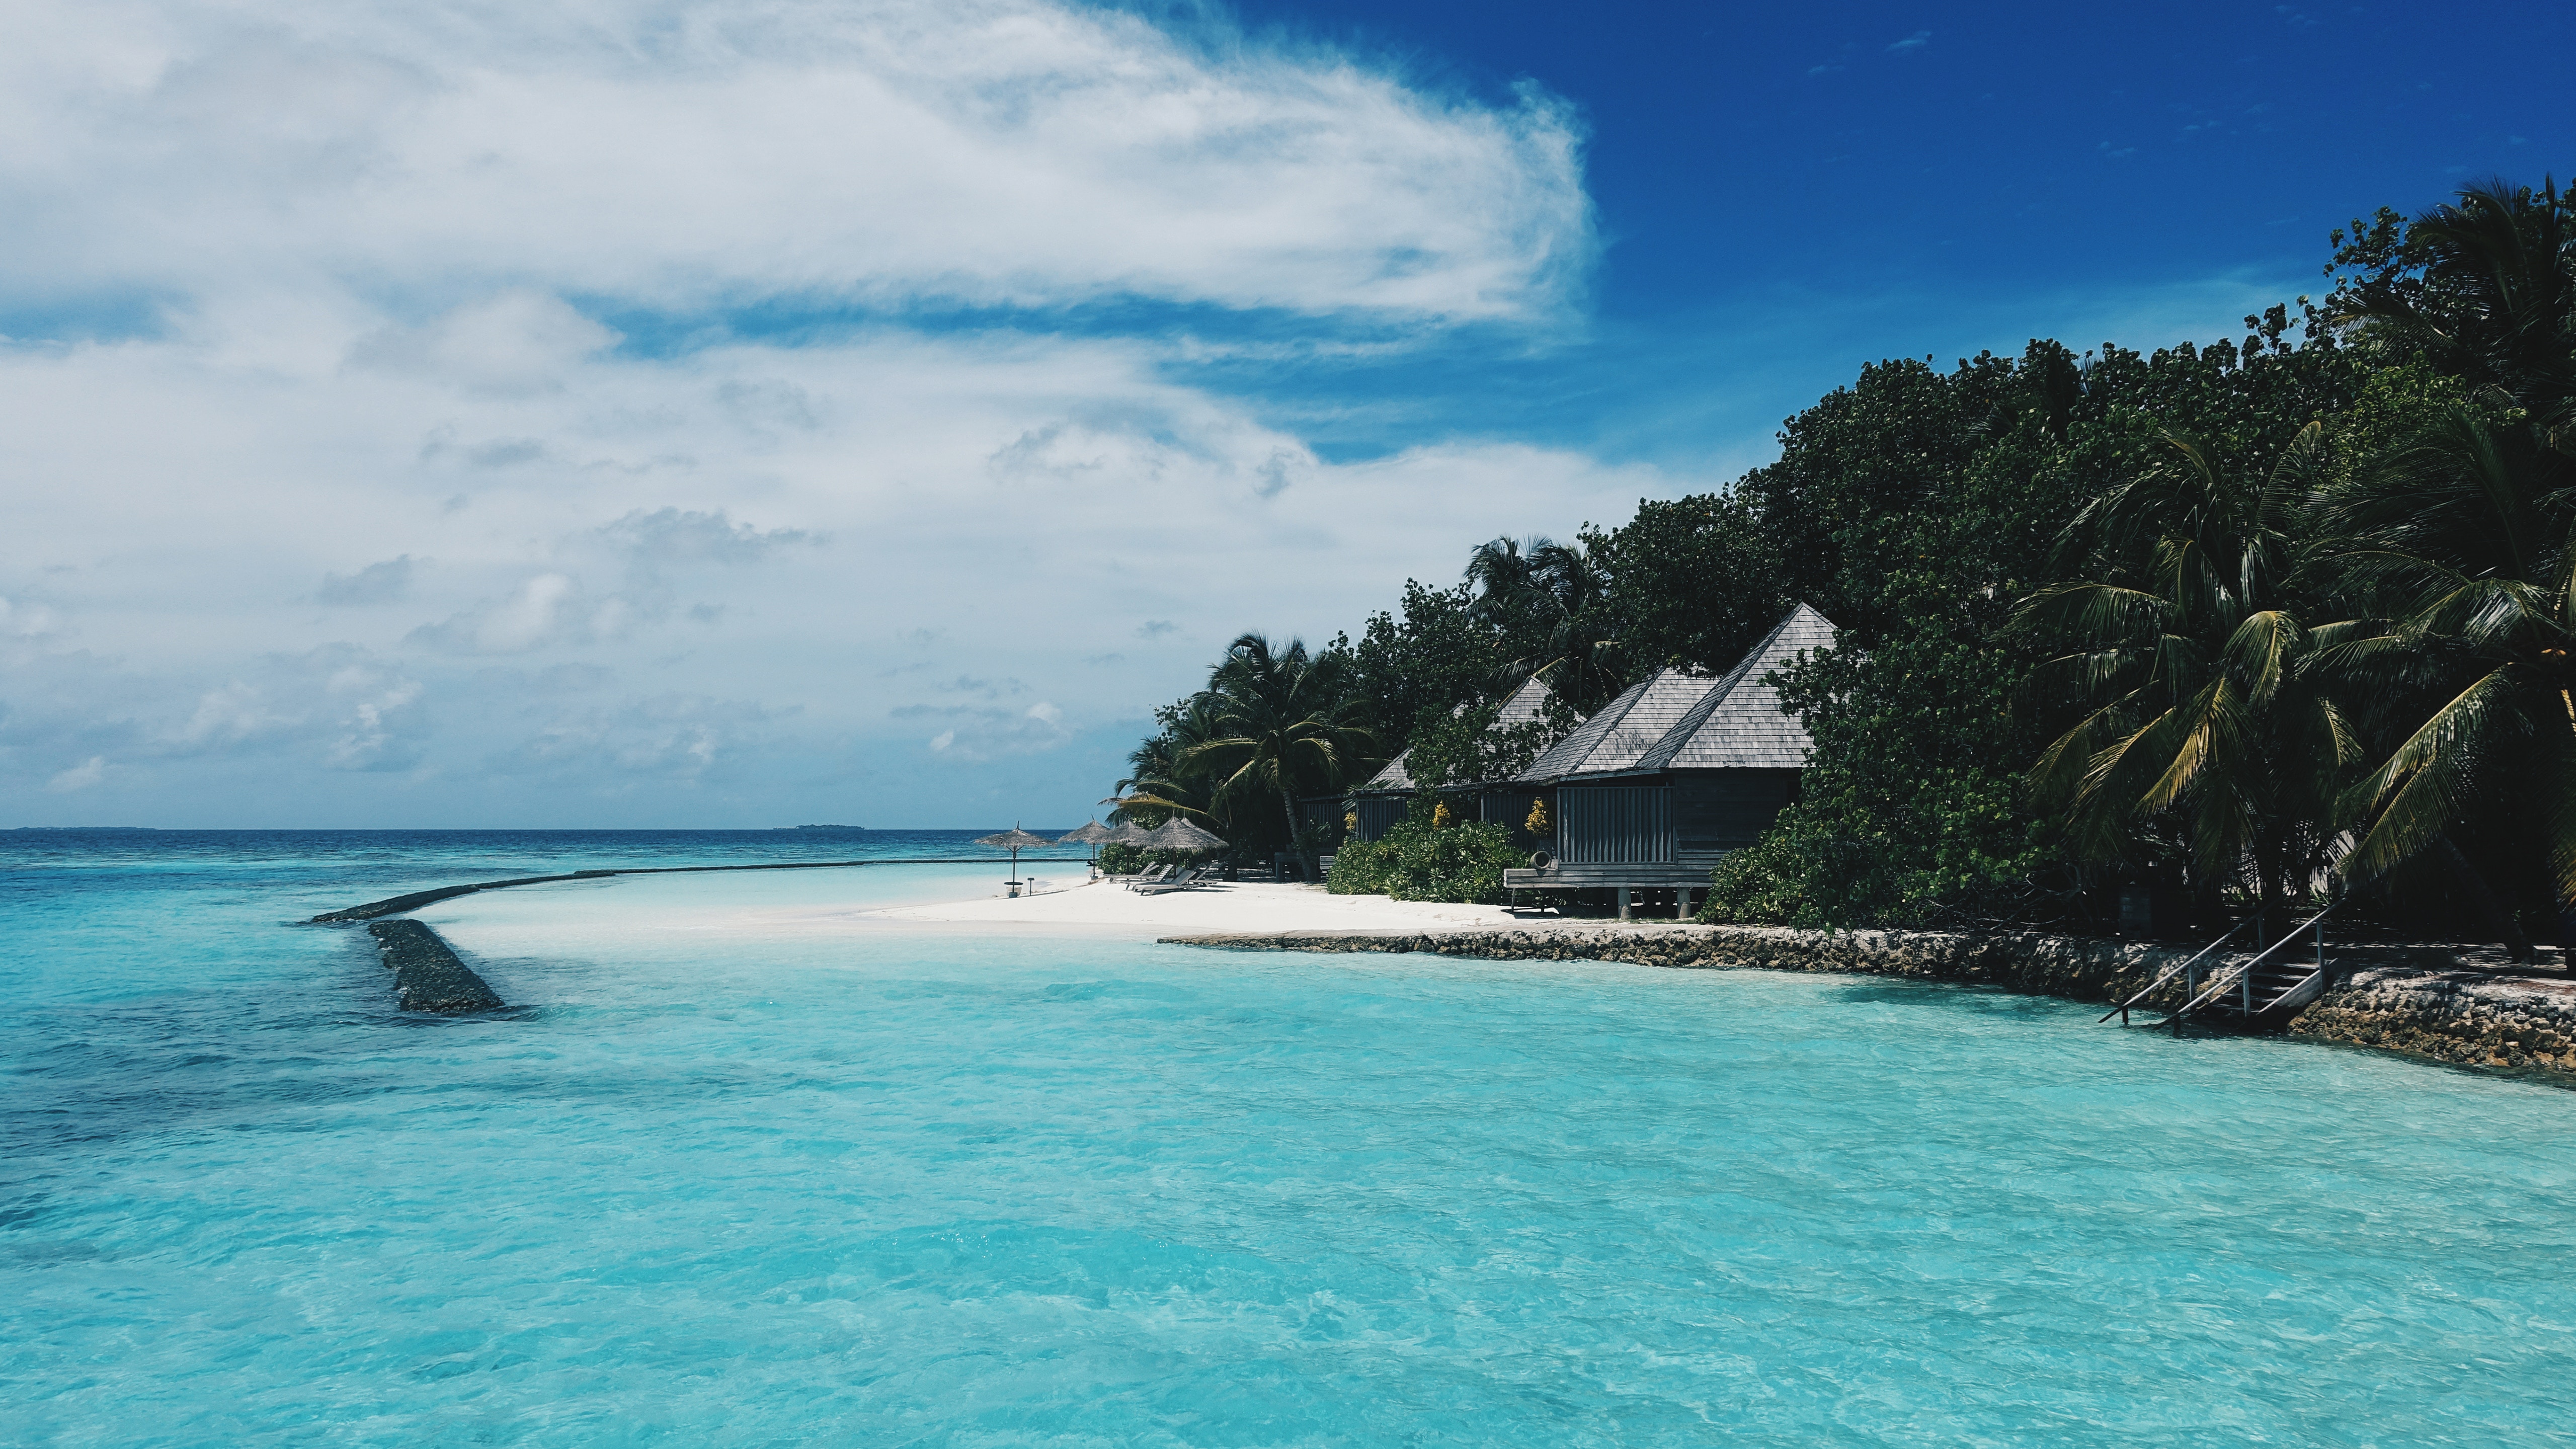 wallpapers summer, nature, trees, beach, tropics, maldives, bungalow